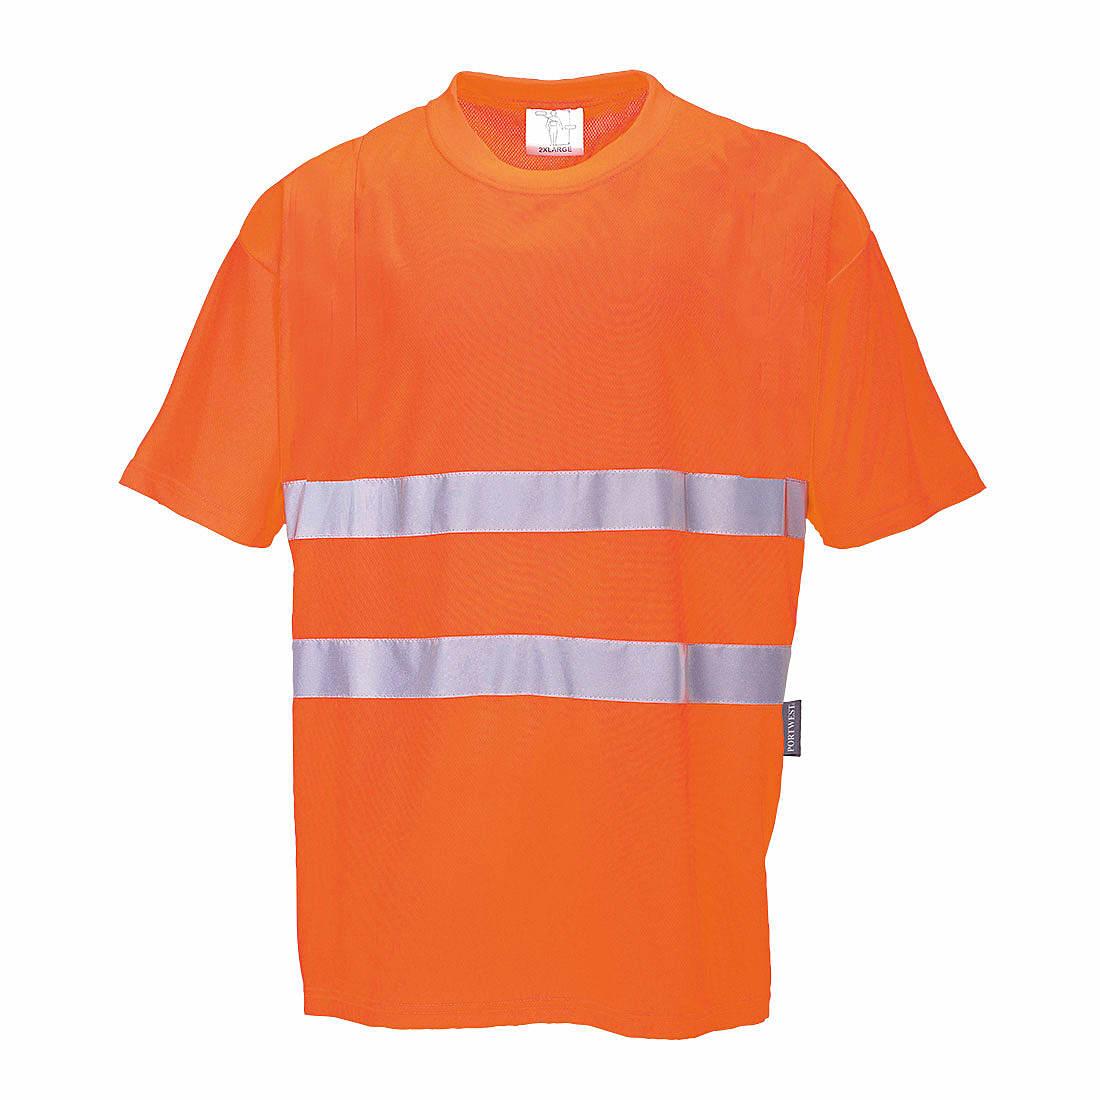 Portwest Cotton Comfort T-Shirt in Orange (Product Code: S172)